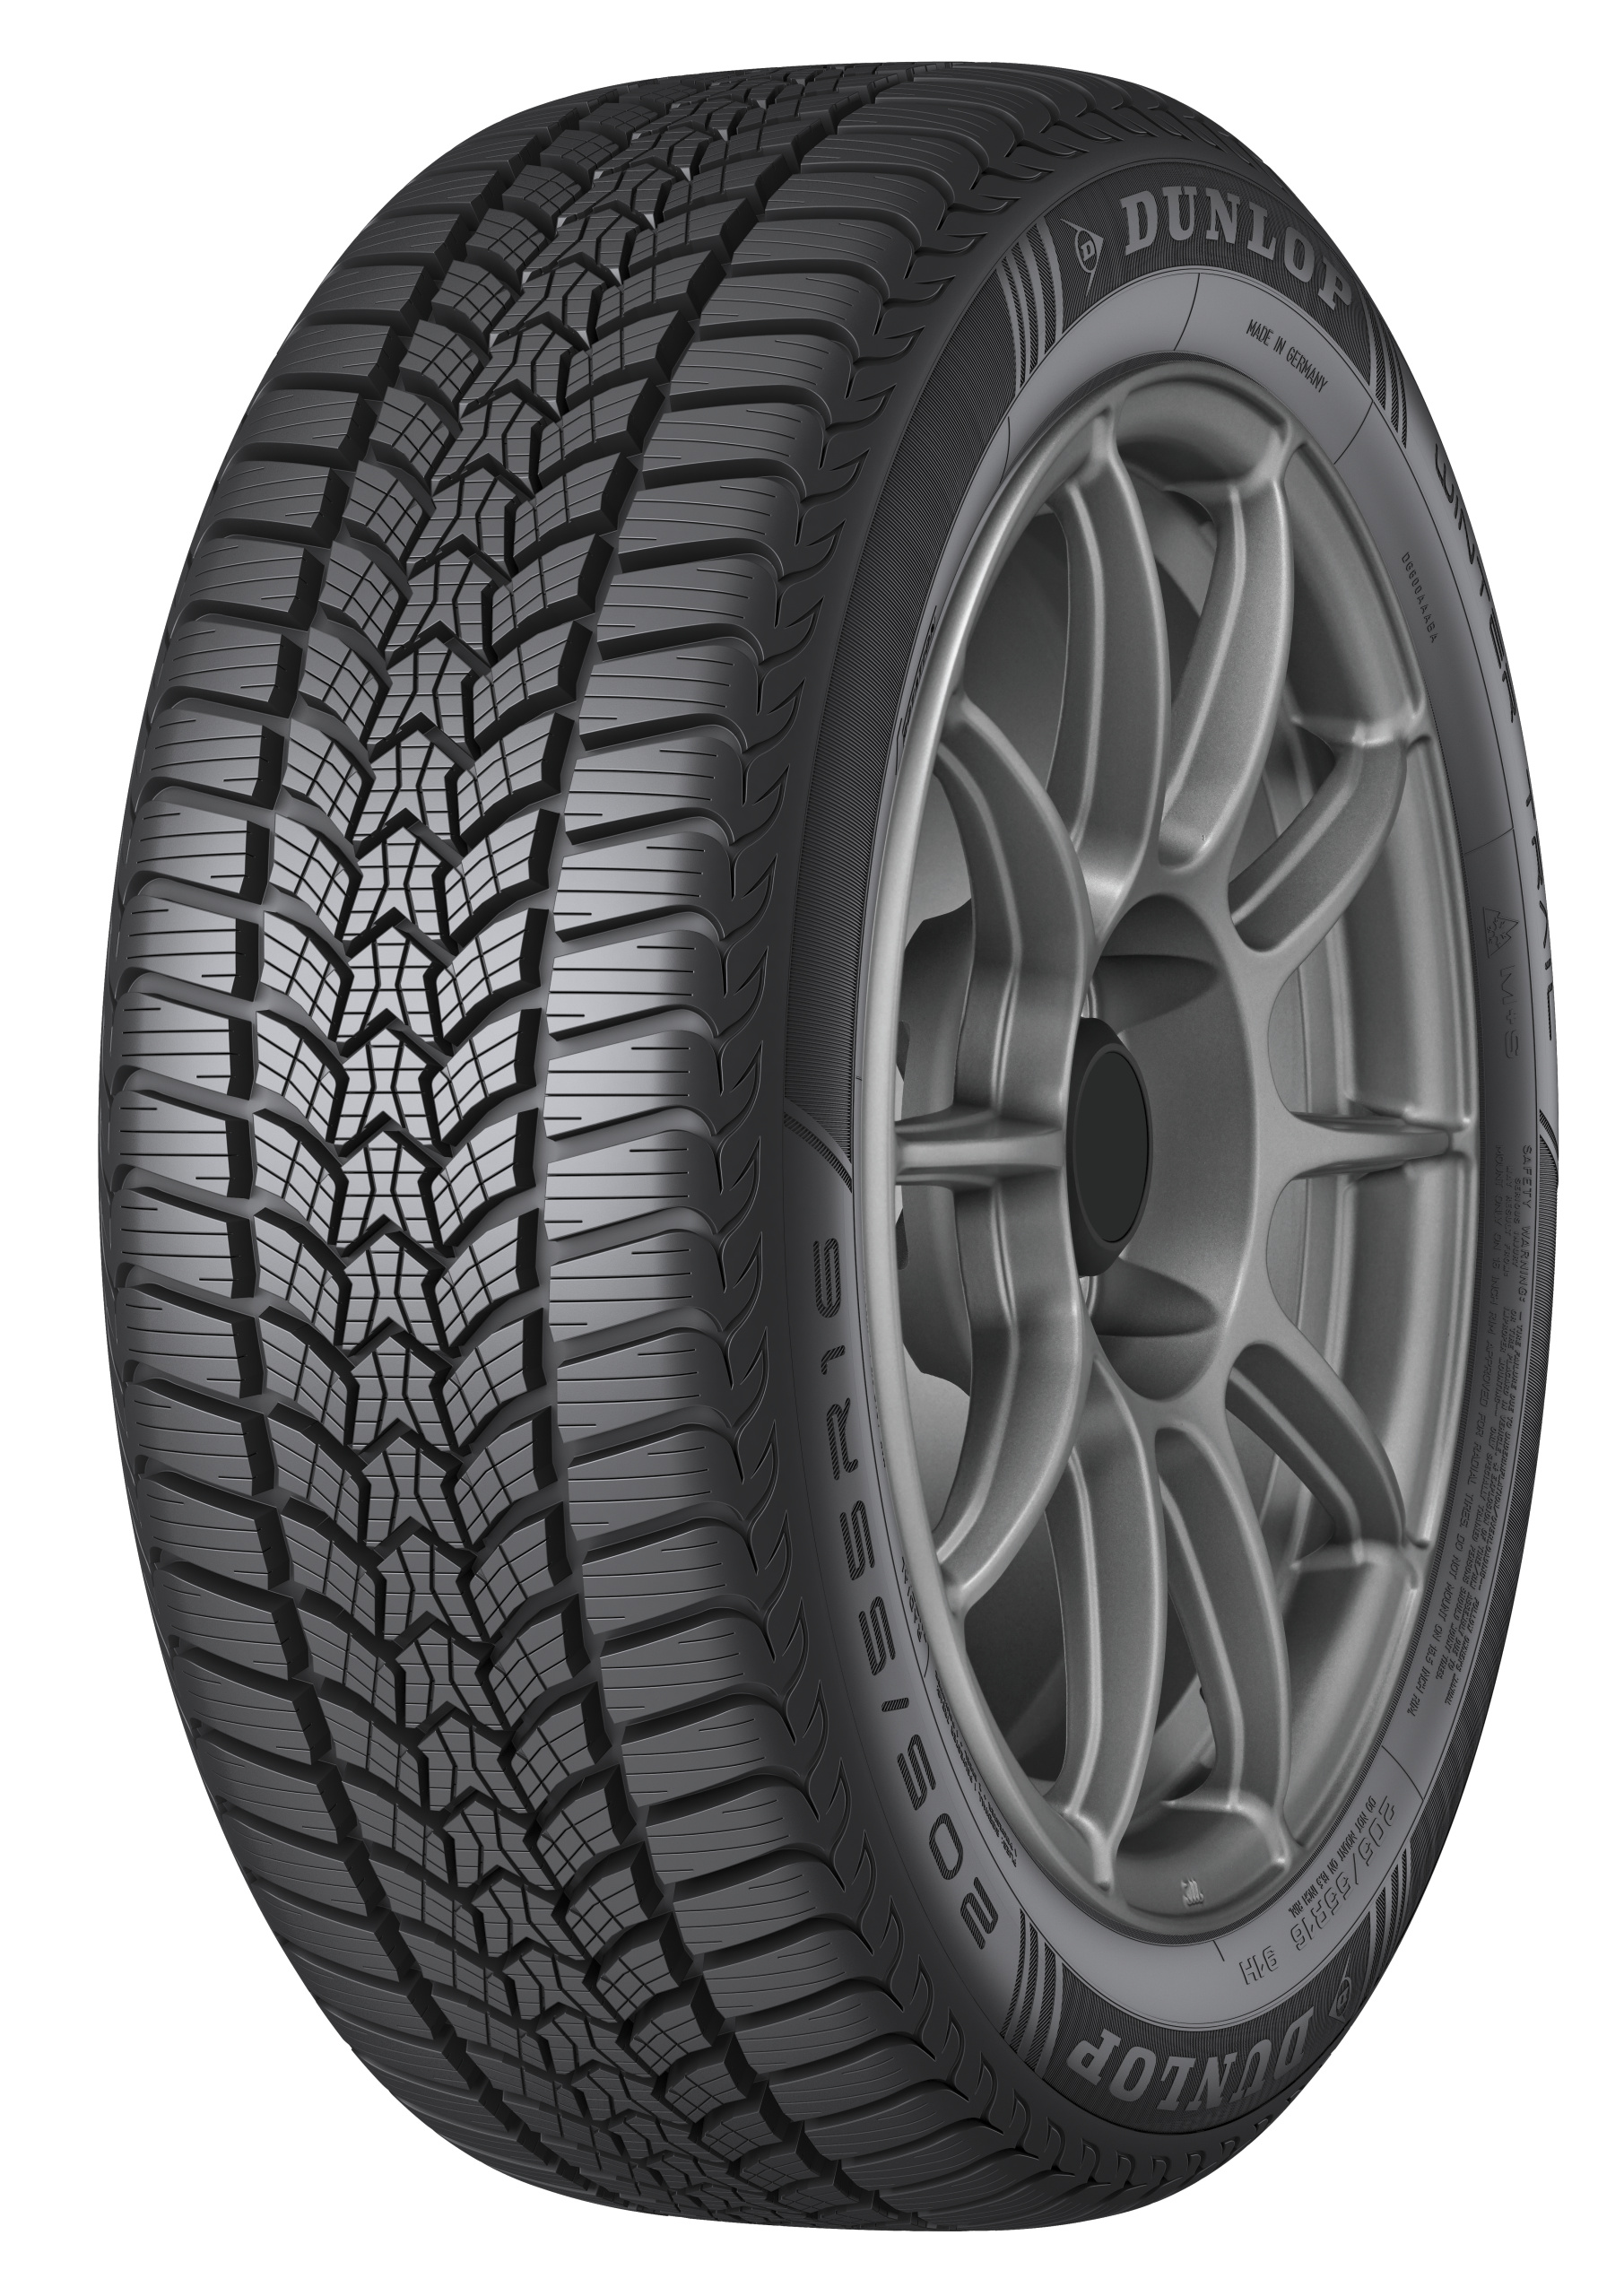 Gomme Nuove Dunlop 225/40 R18 92V WINTER TRAIL MFS XL M+S pneumatici nuovi Invernale